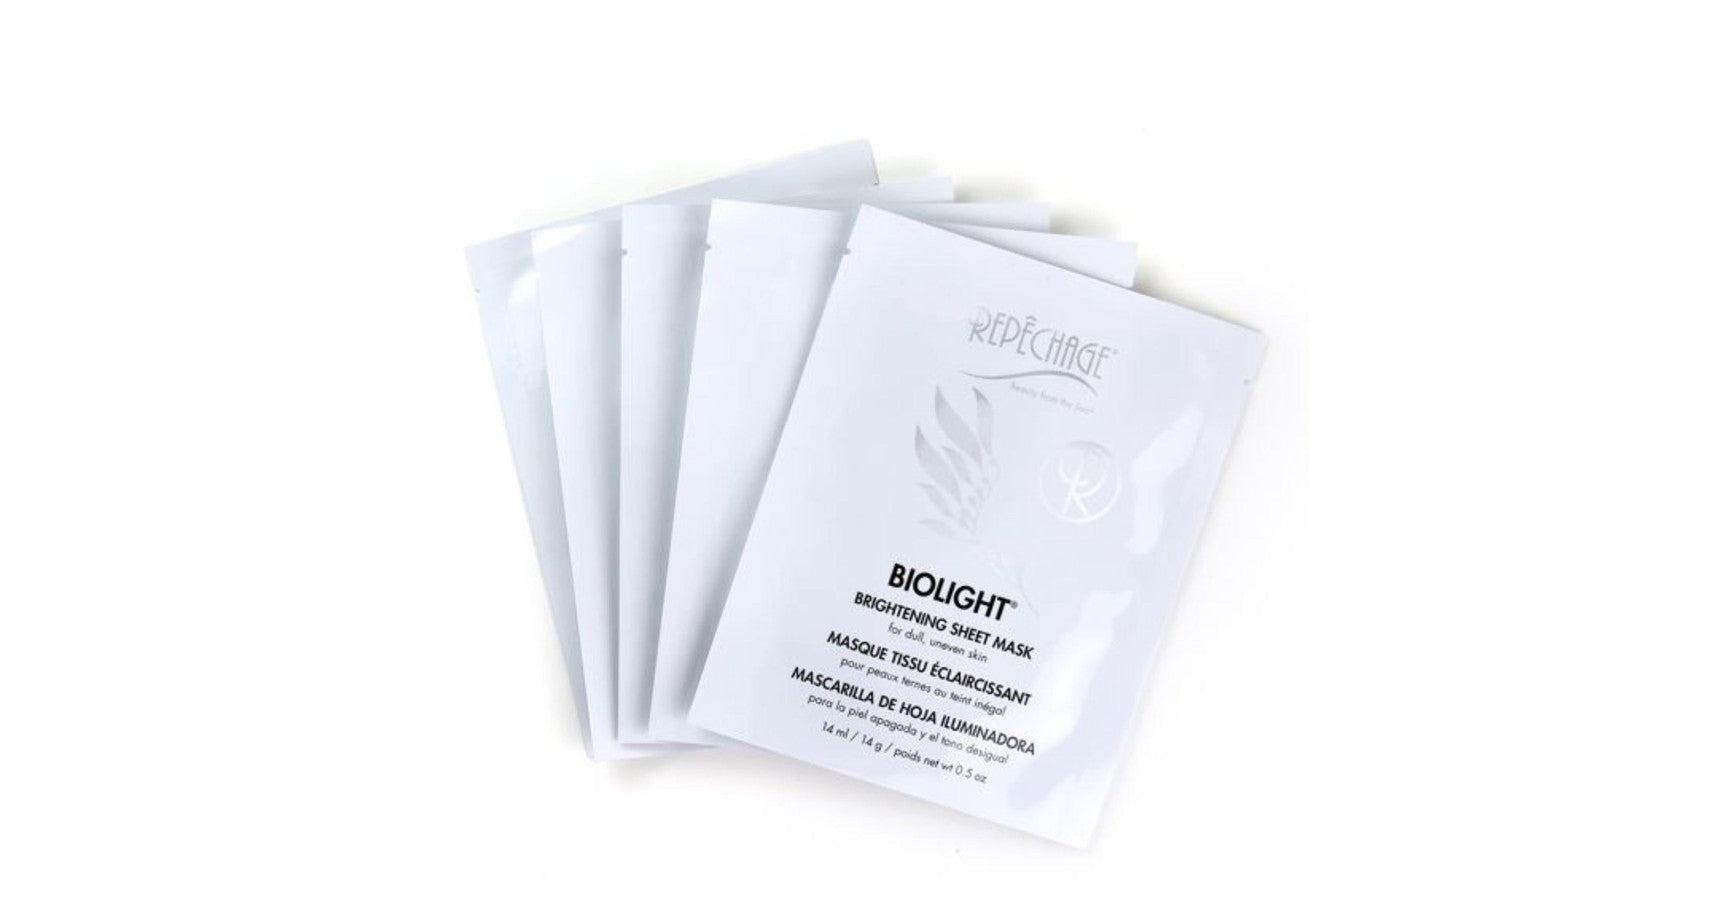 Repechage Biolight® Brightening Sheet Mask (5 treatments)